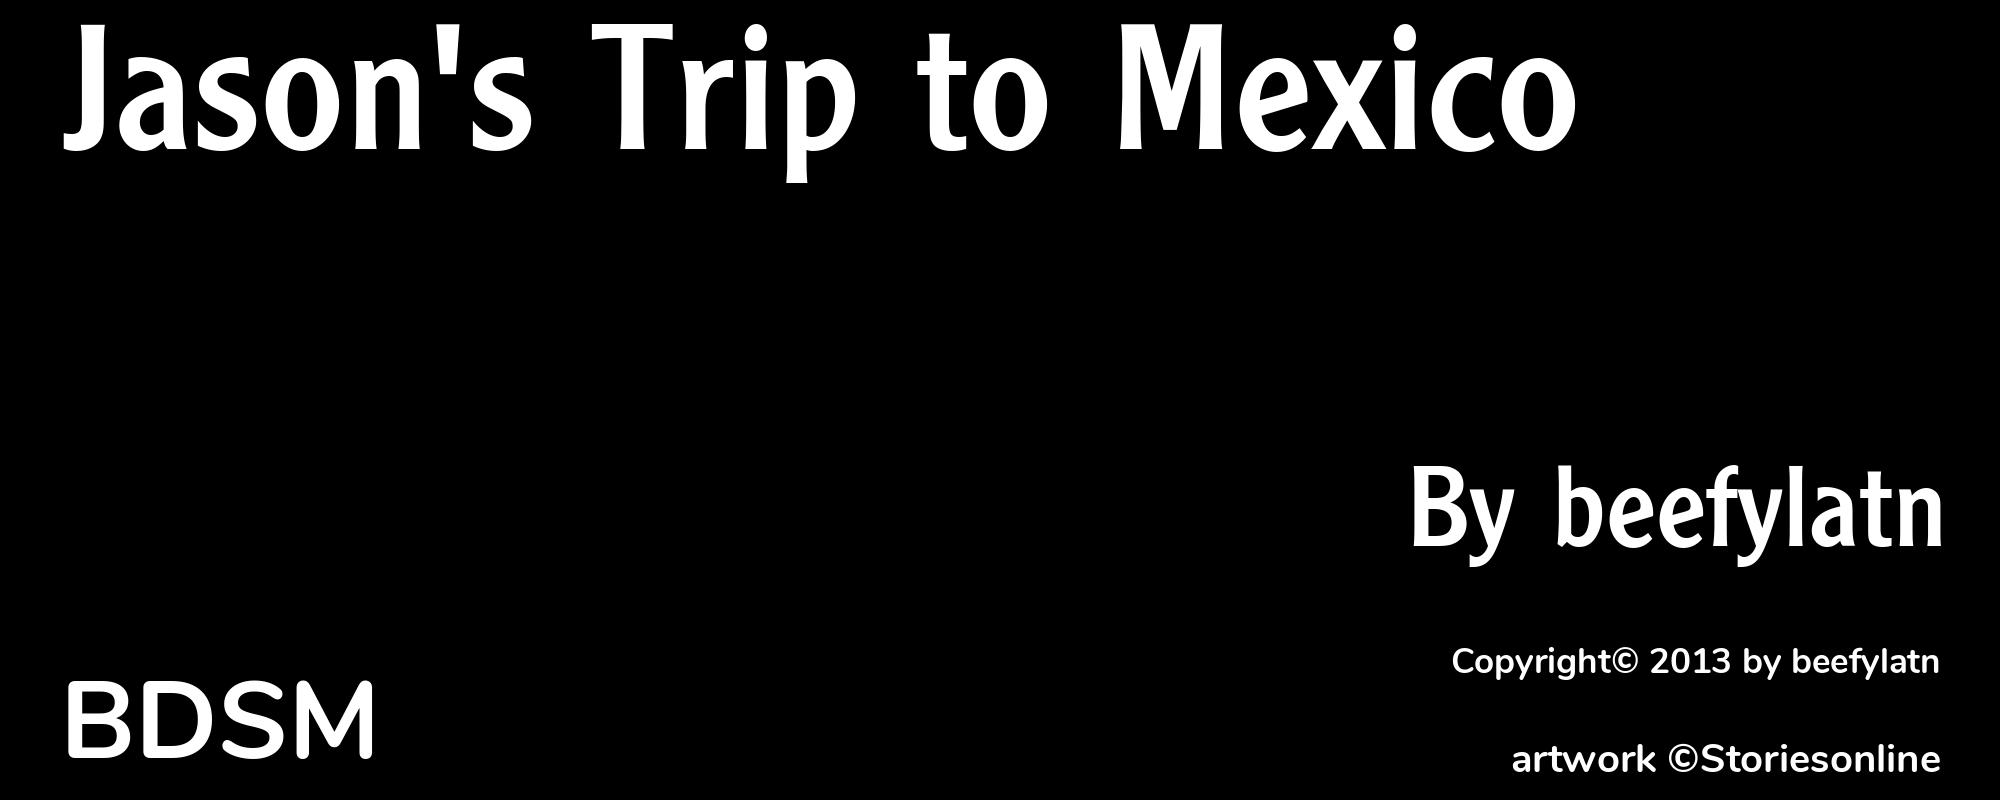 Jason's Trip to Mexico - Cover